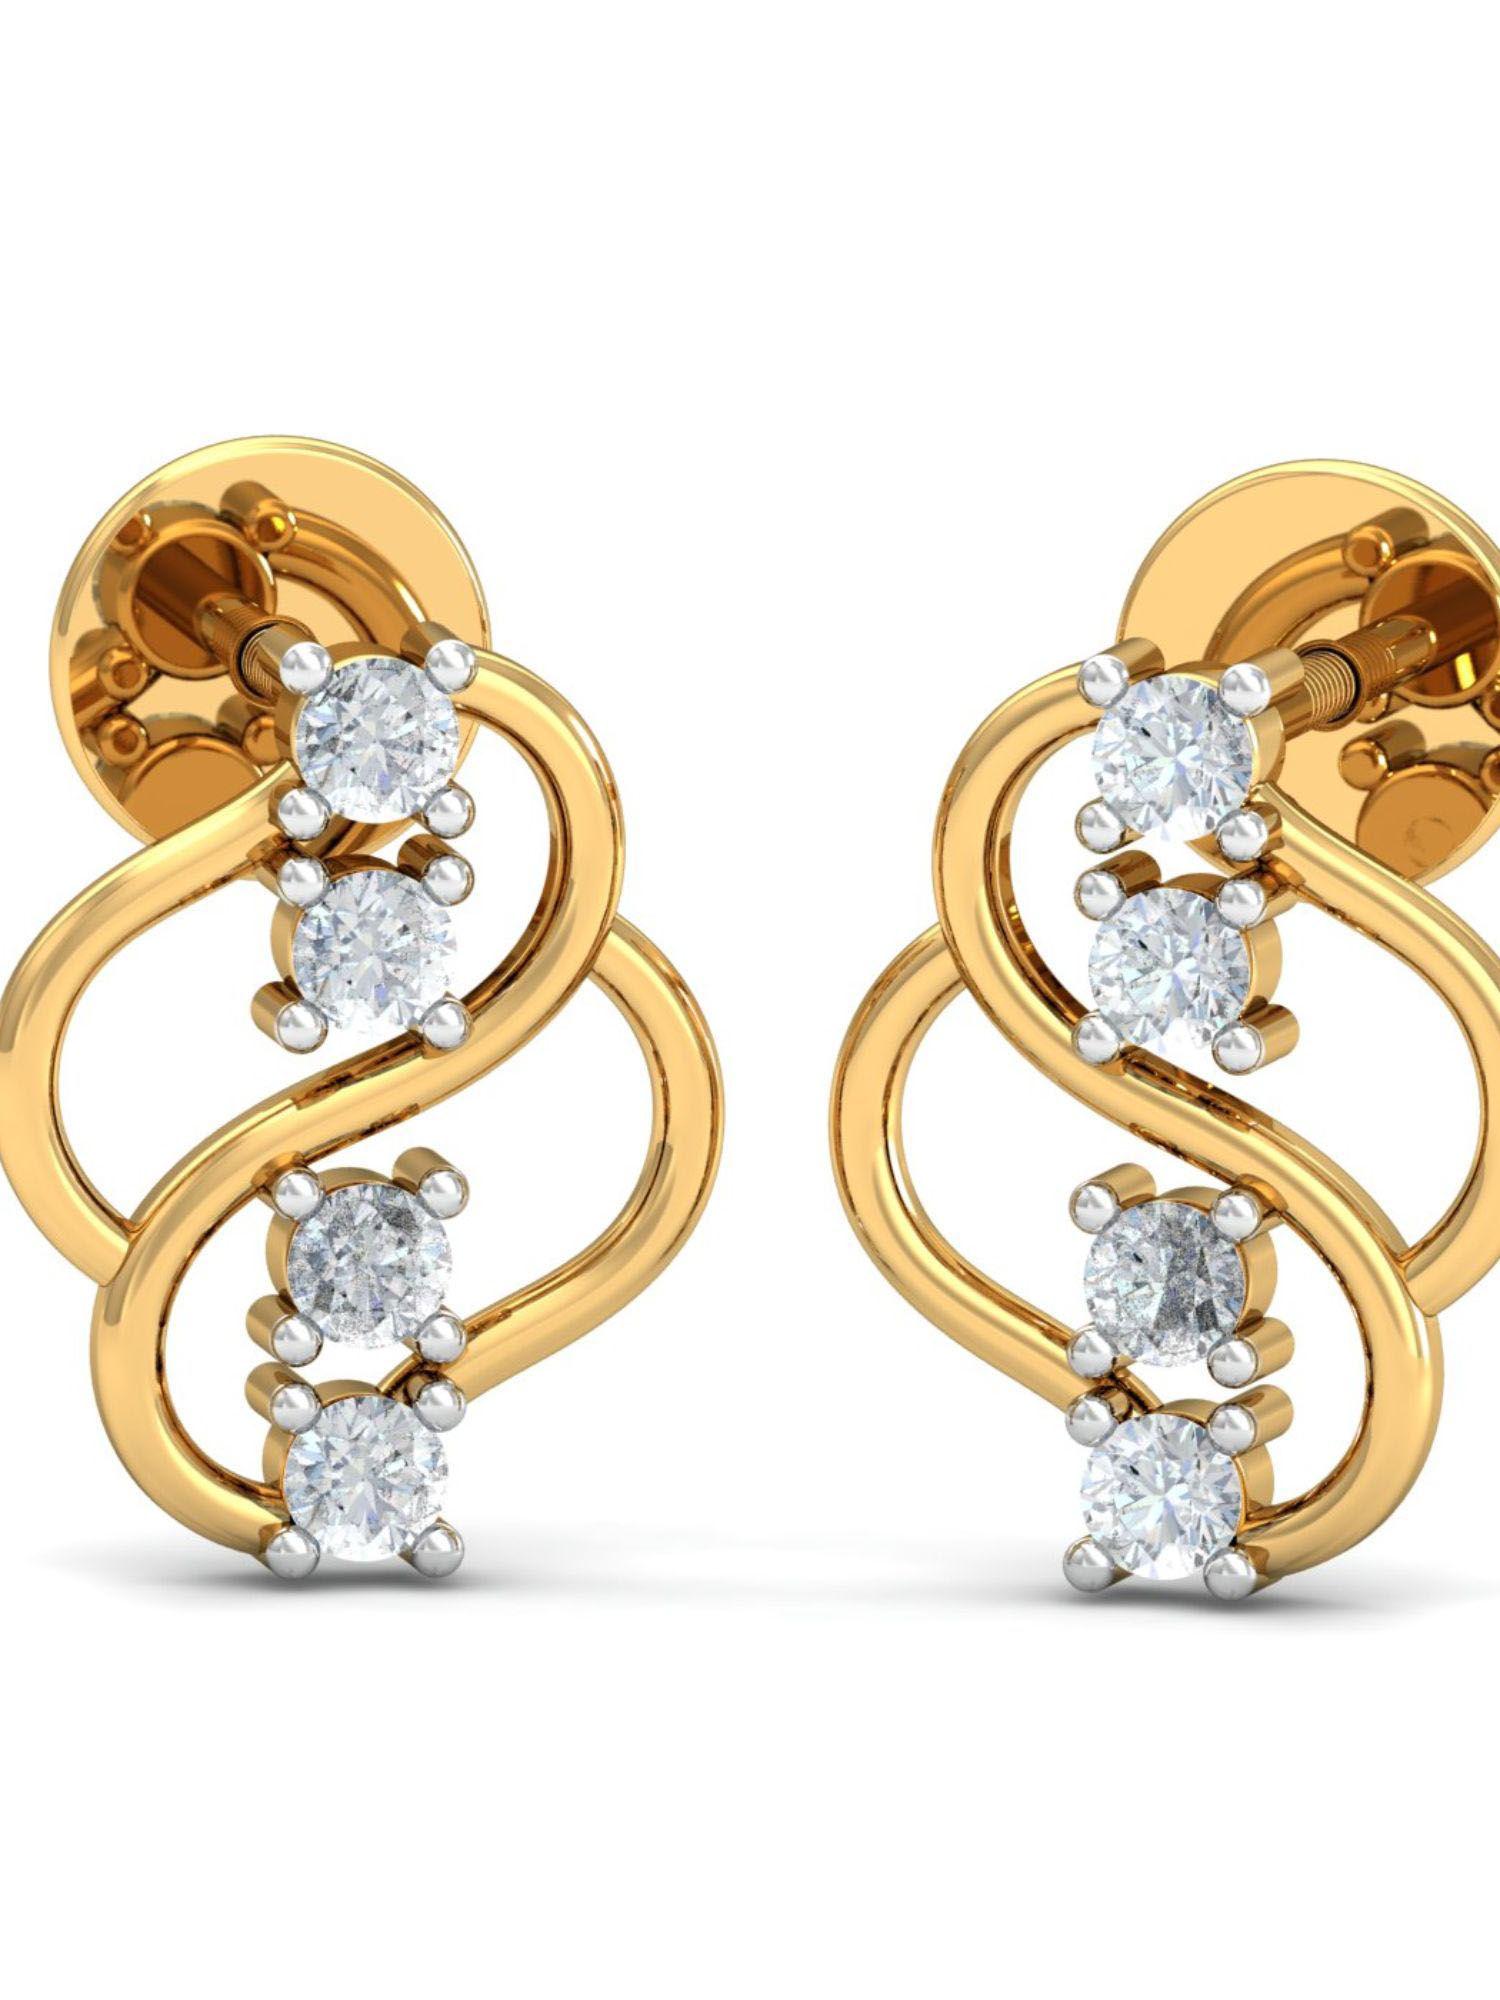 18k carol curvy stud earrings for women and girls